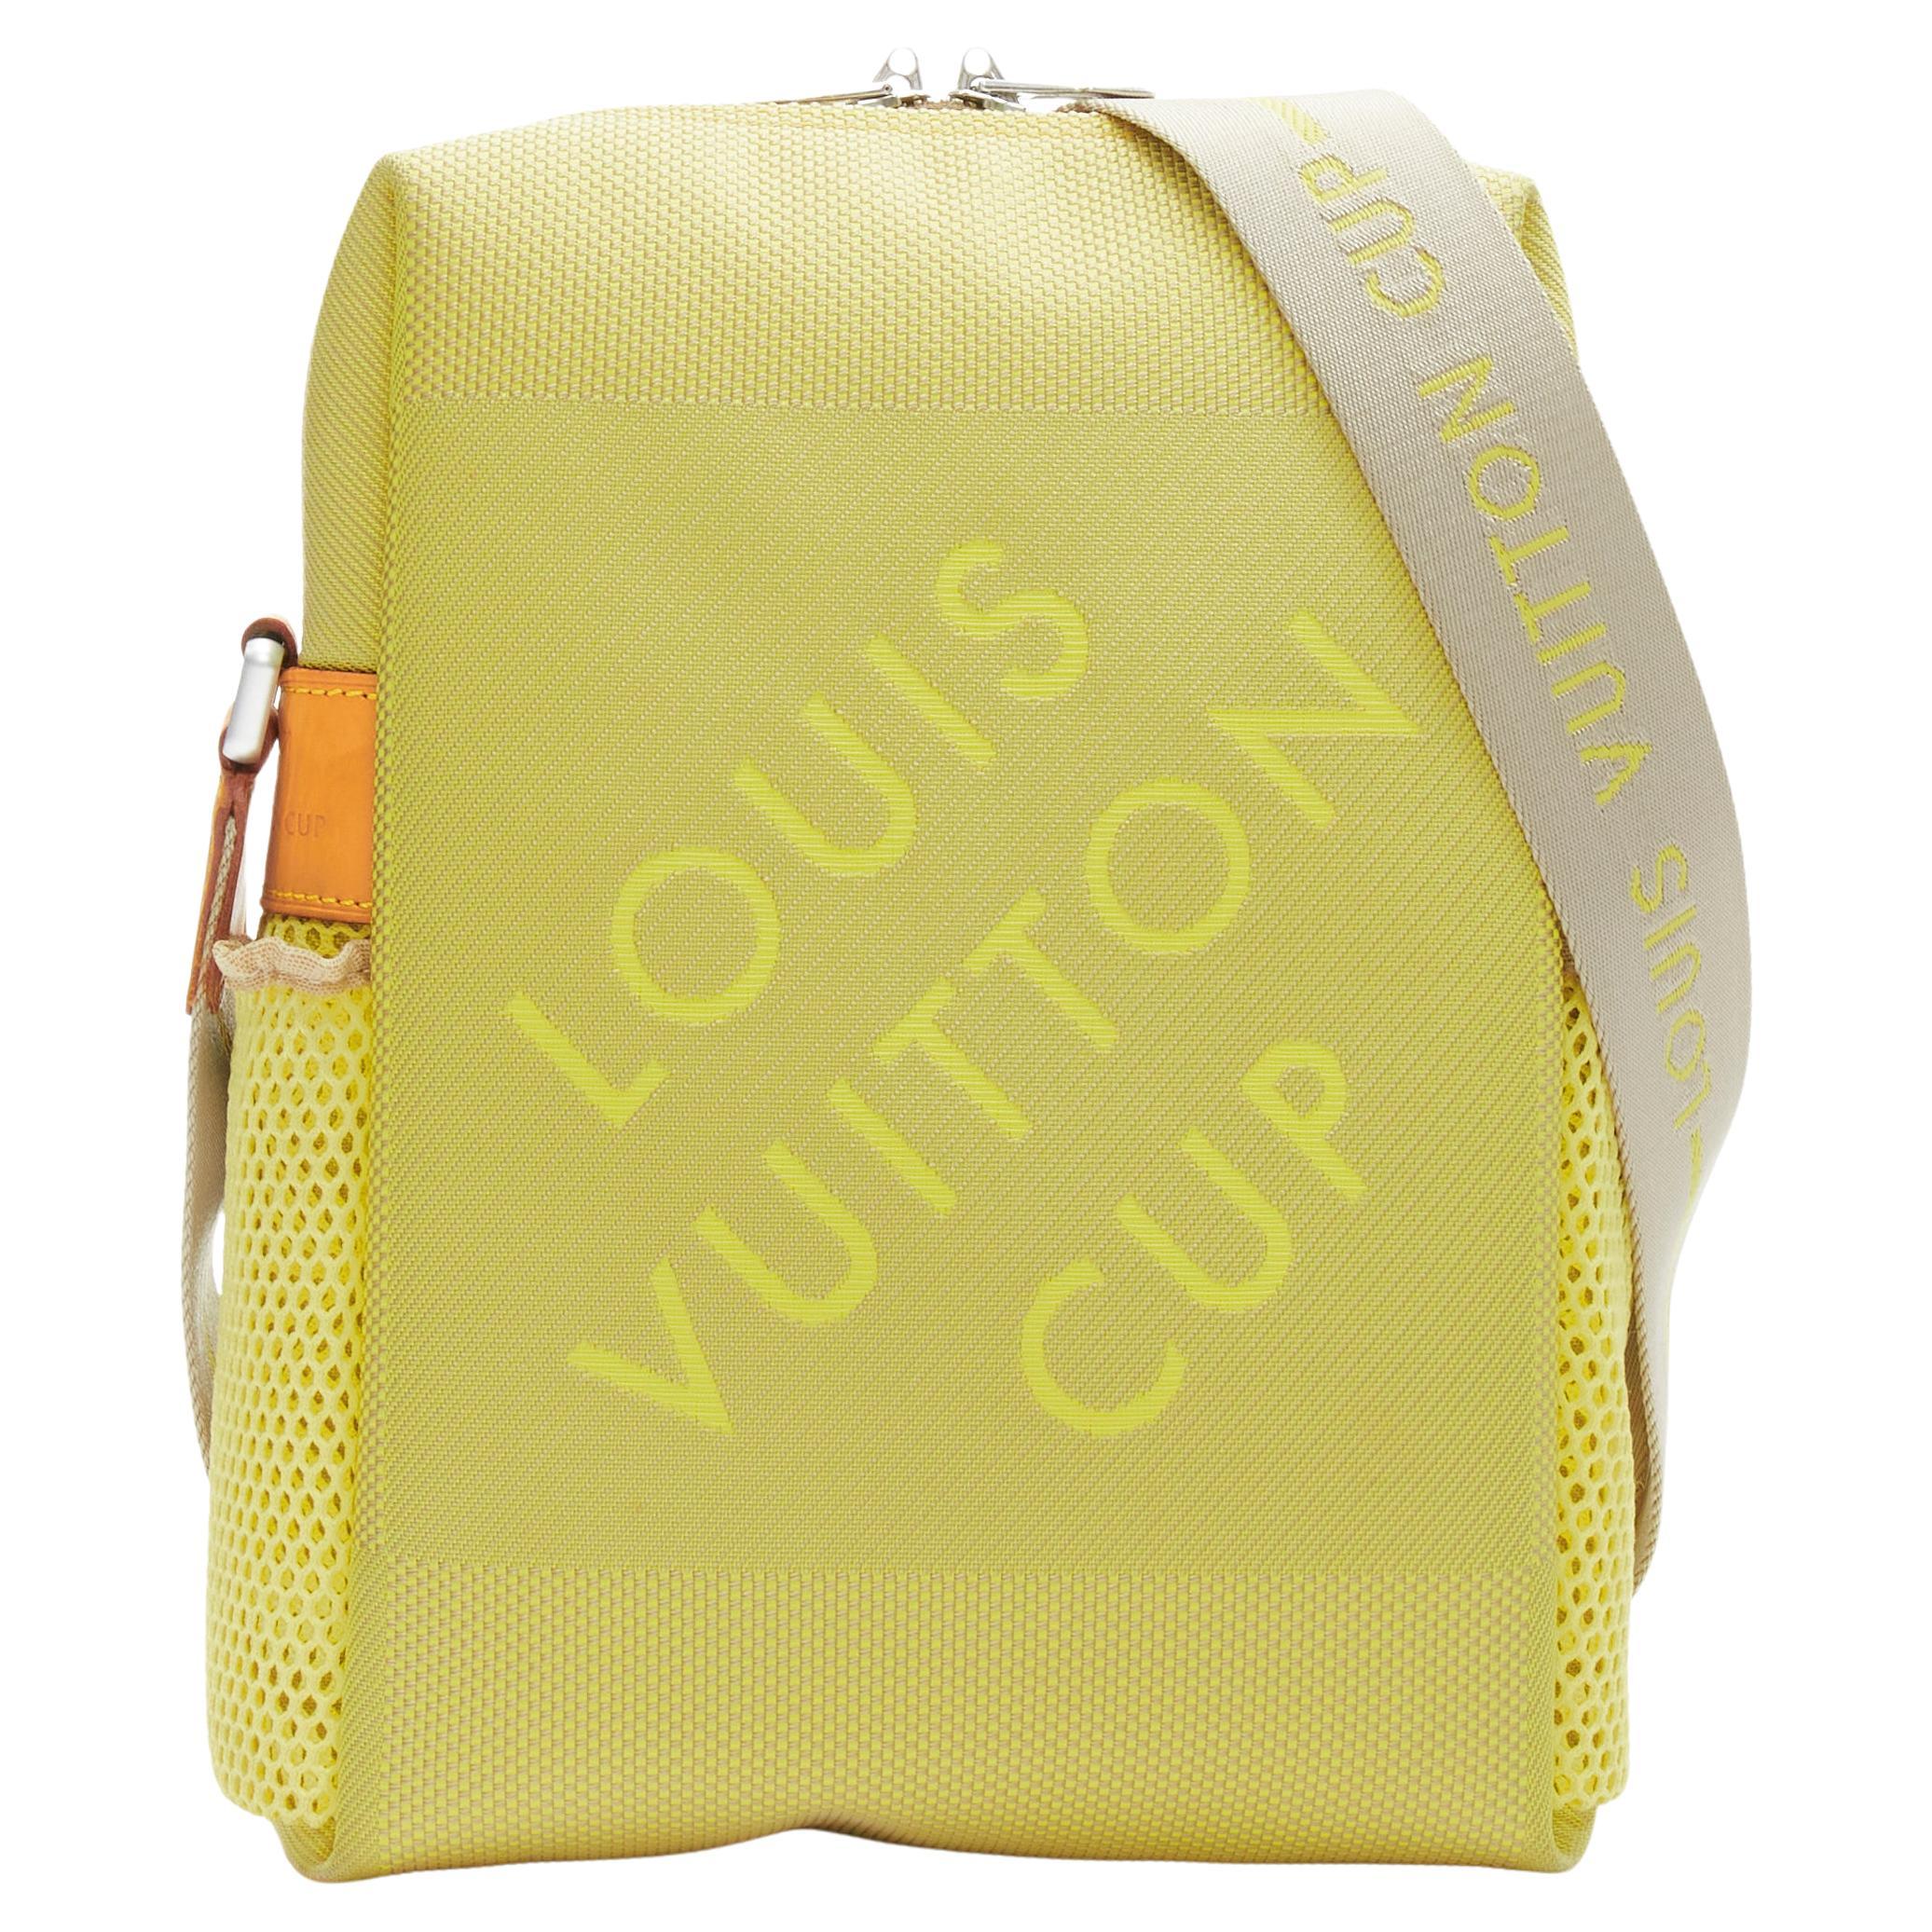 LOUIS VUITTON 2003 LV CUP Geant neon yellow damier canvas